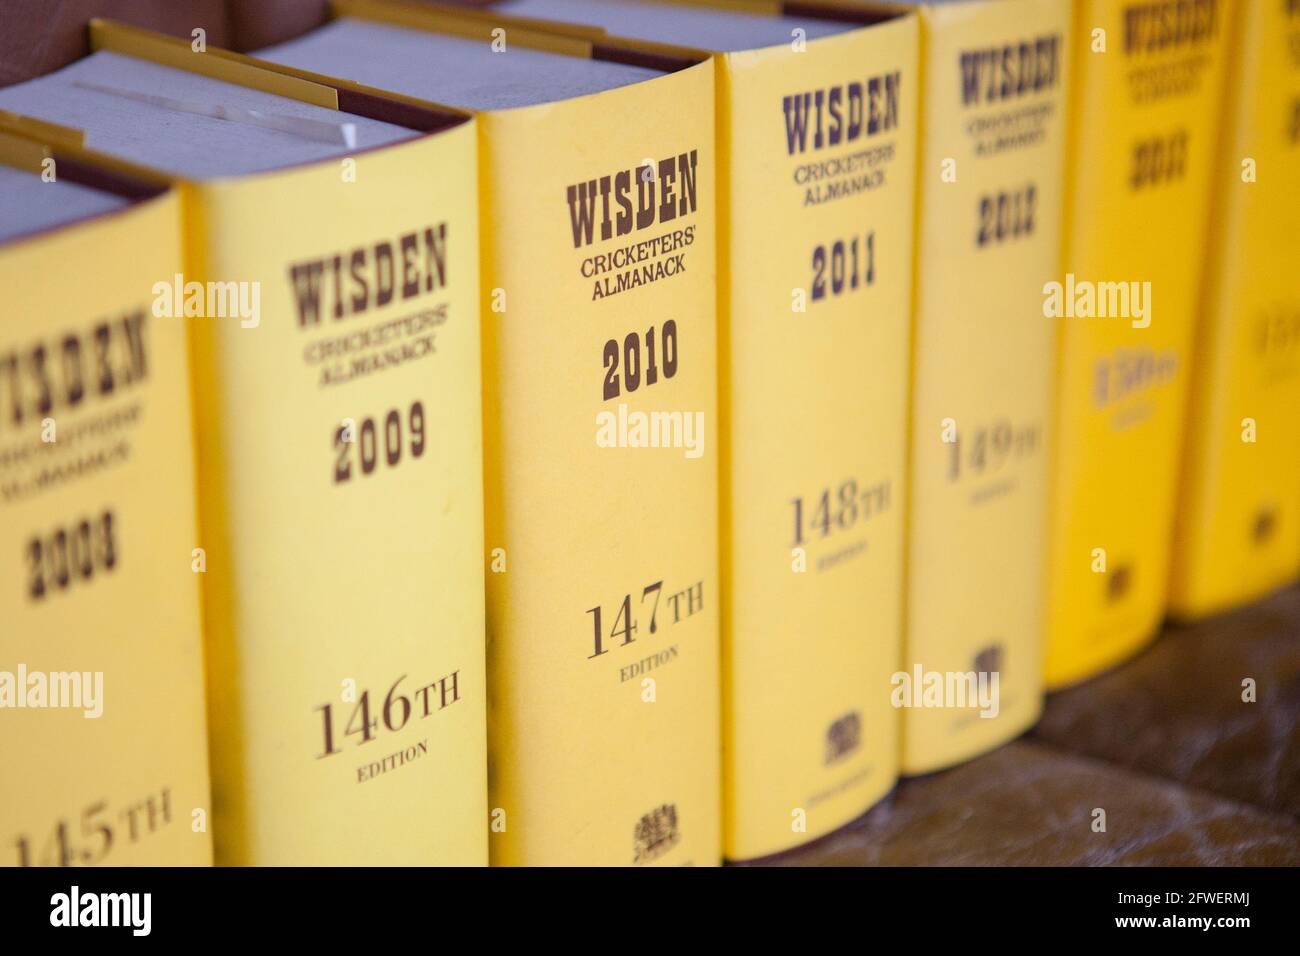 Display of Wisden Cricket Almanacks in a domestic home Stock Photo